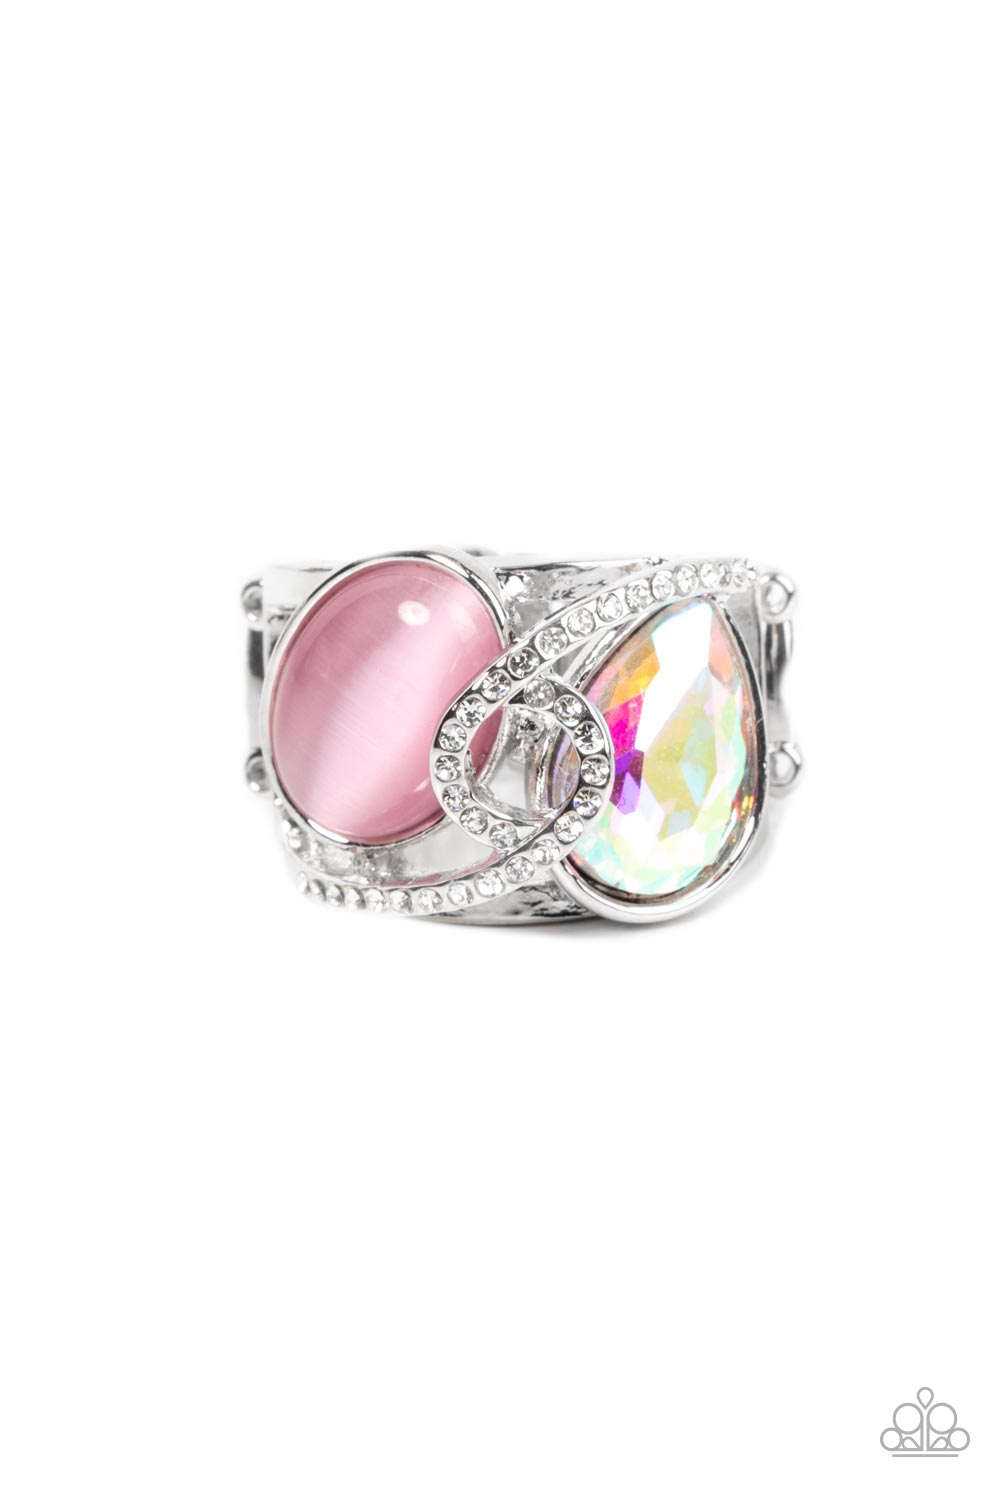 SELFIE-Indulgence Pink Cat&#39;s Eye and Iridescent Rhinestone Ring - Paparazzi Accessories- lightbox - CarasShop.com - $5 Jewelry by Cara Jewels